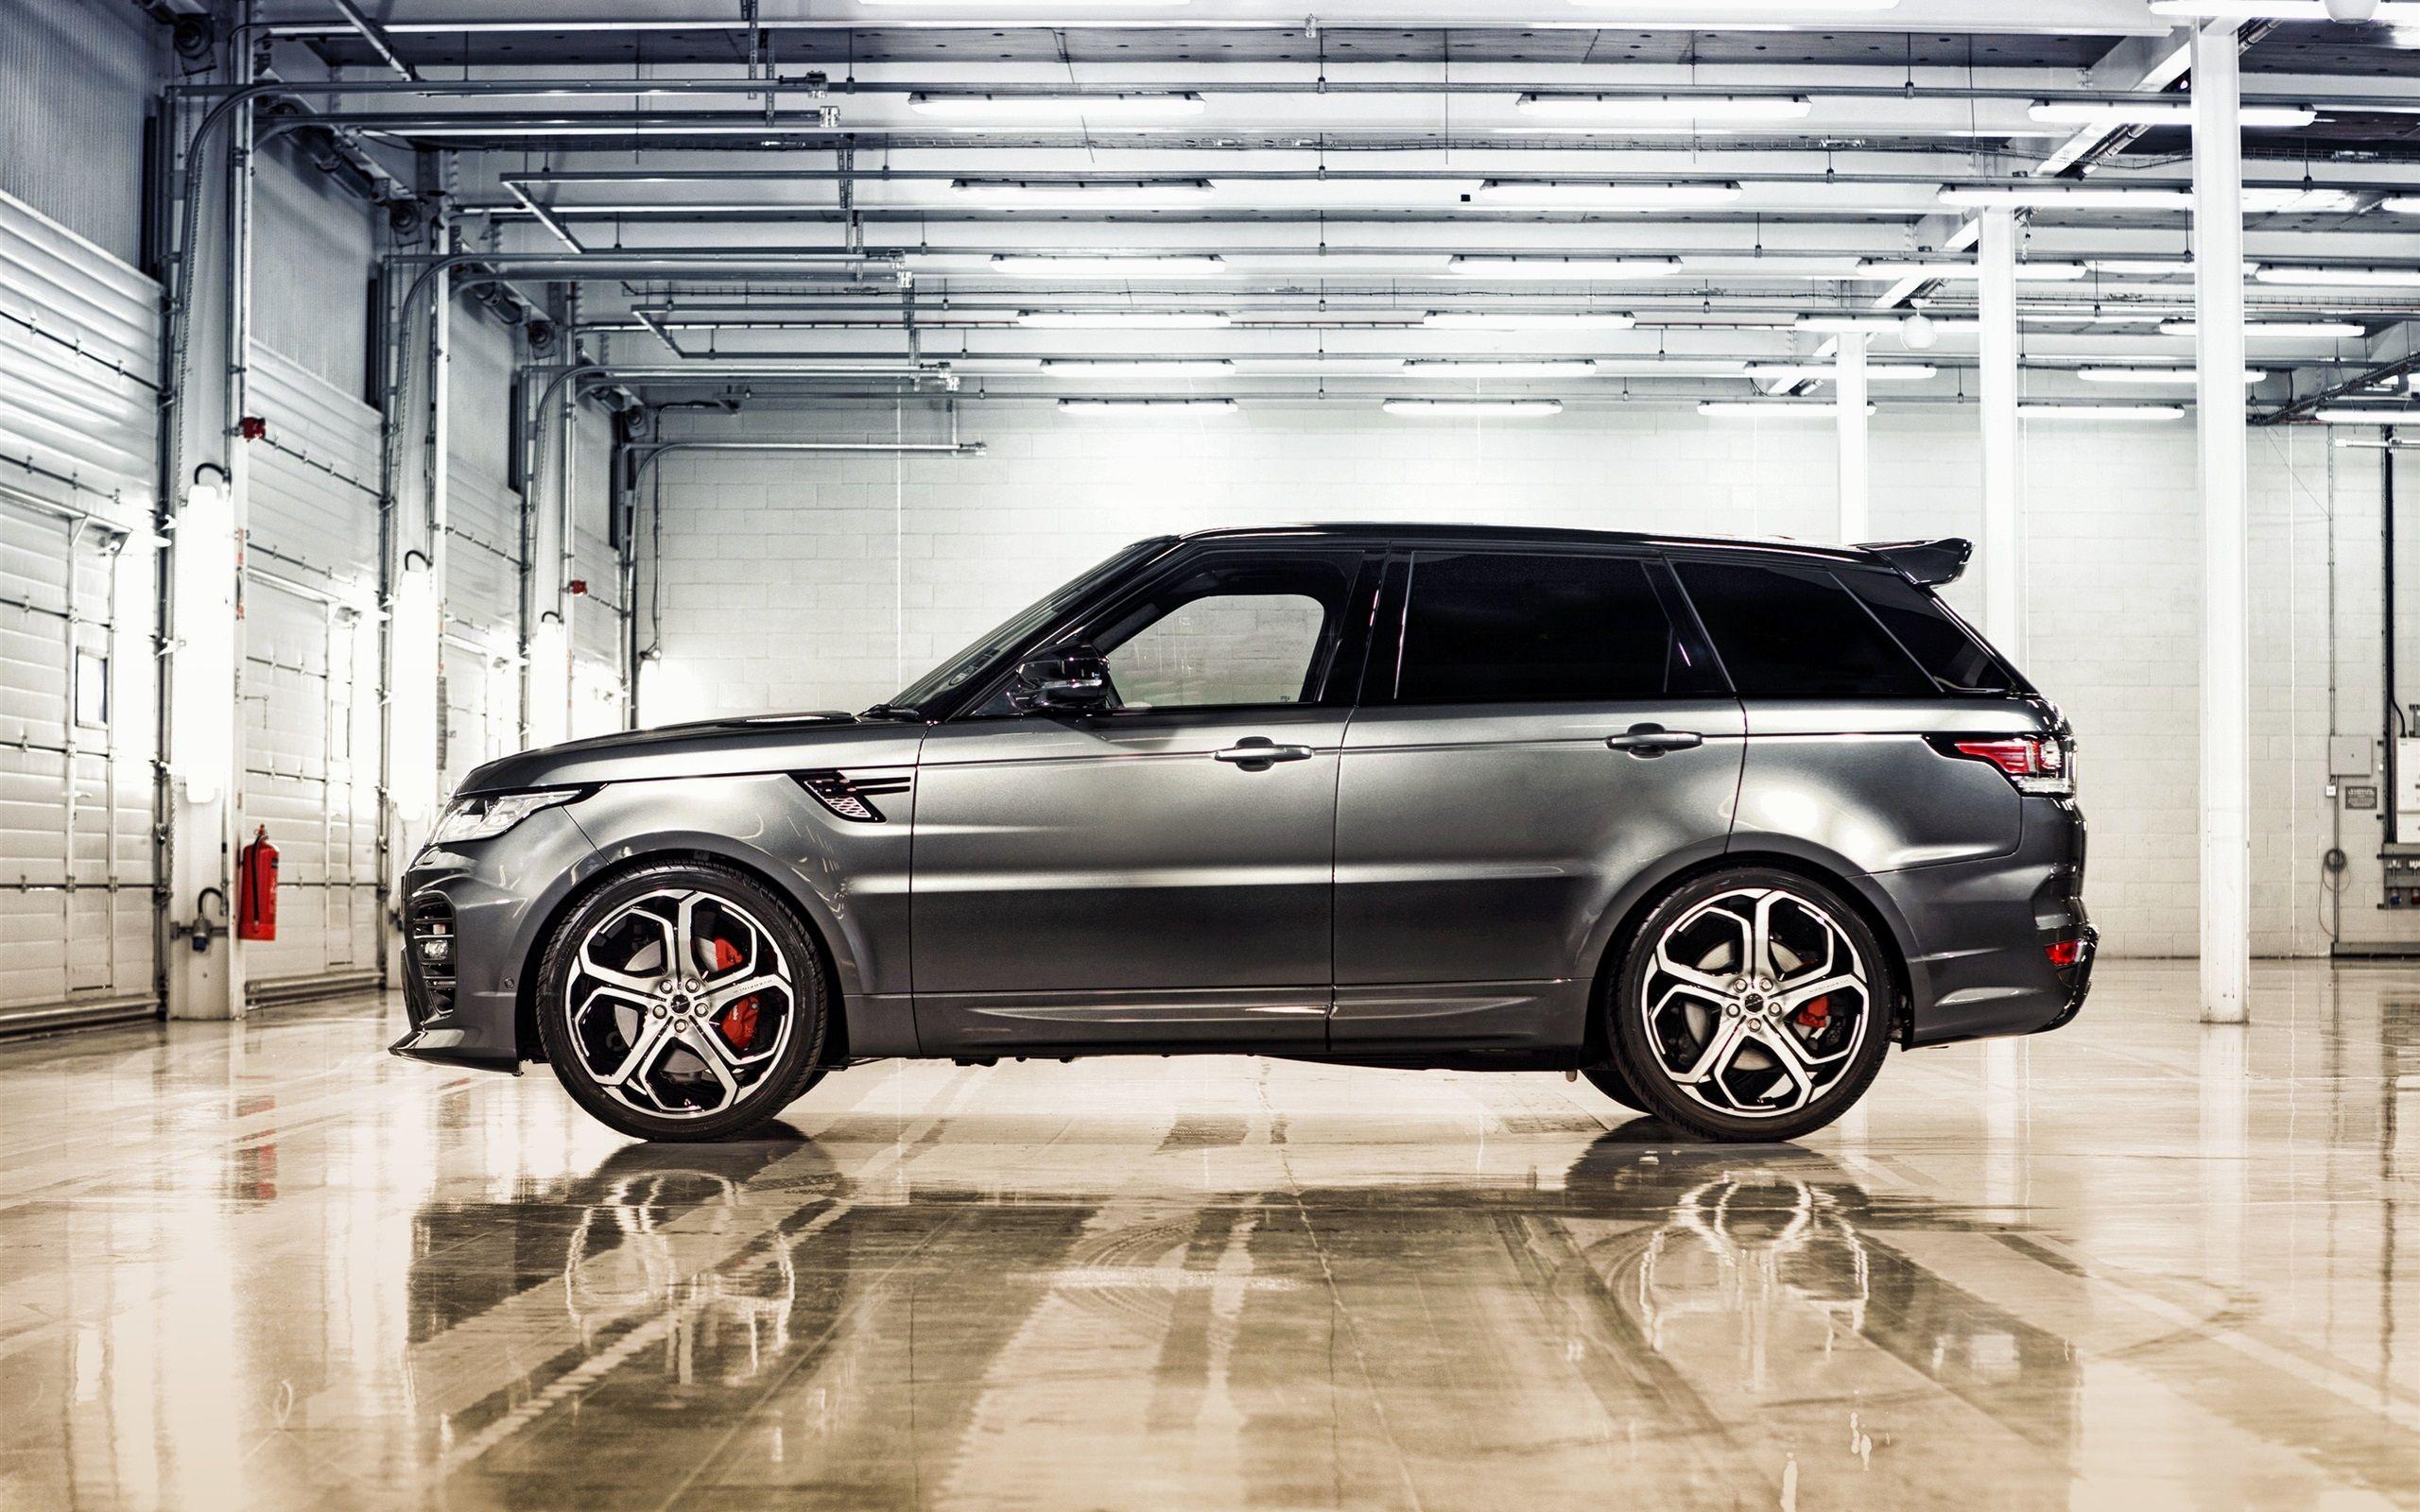 Range Rover sport silver SUV car side view wallpaper, 2014 HD